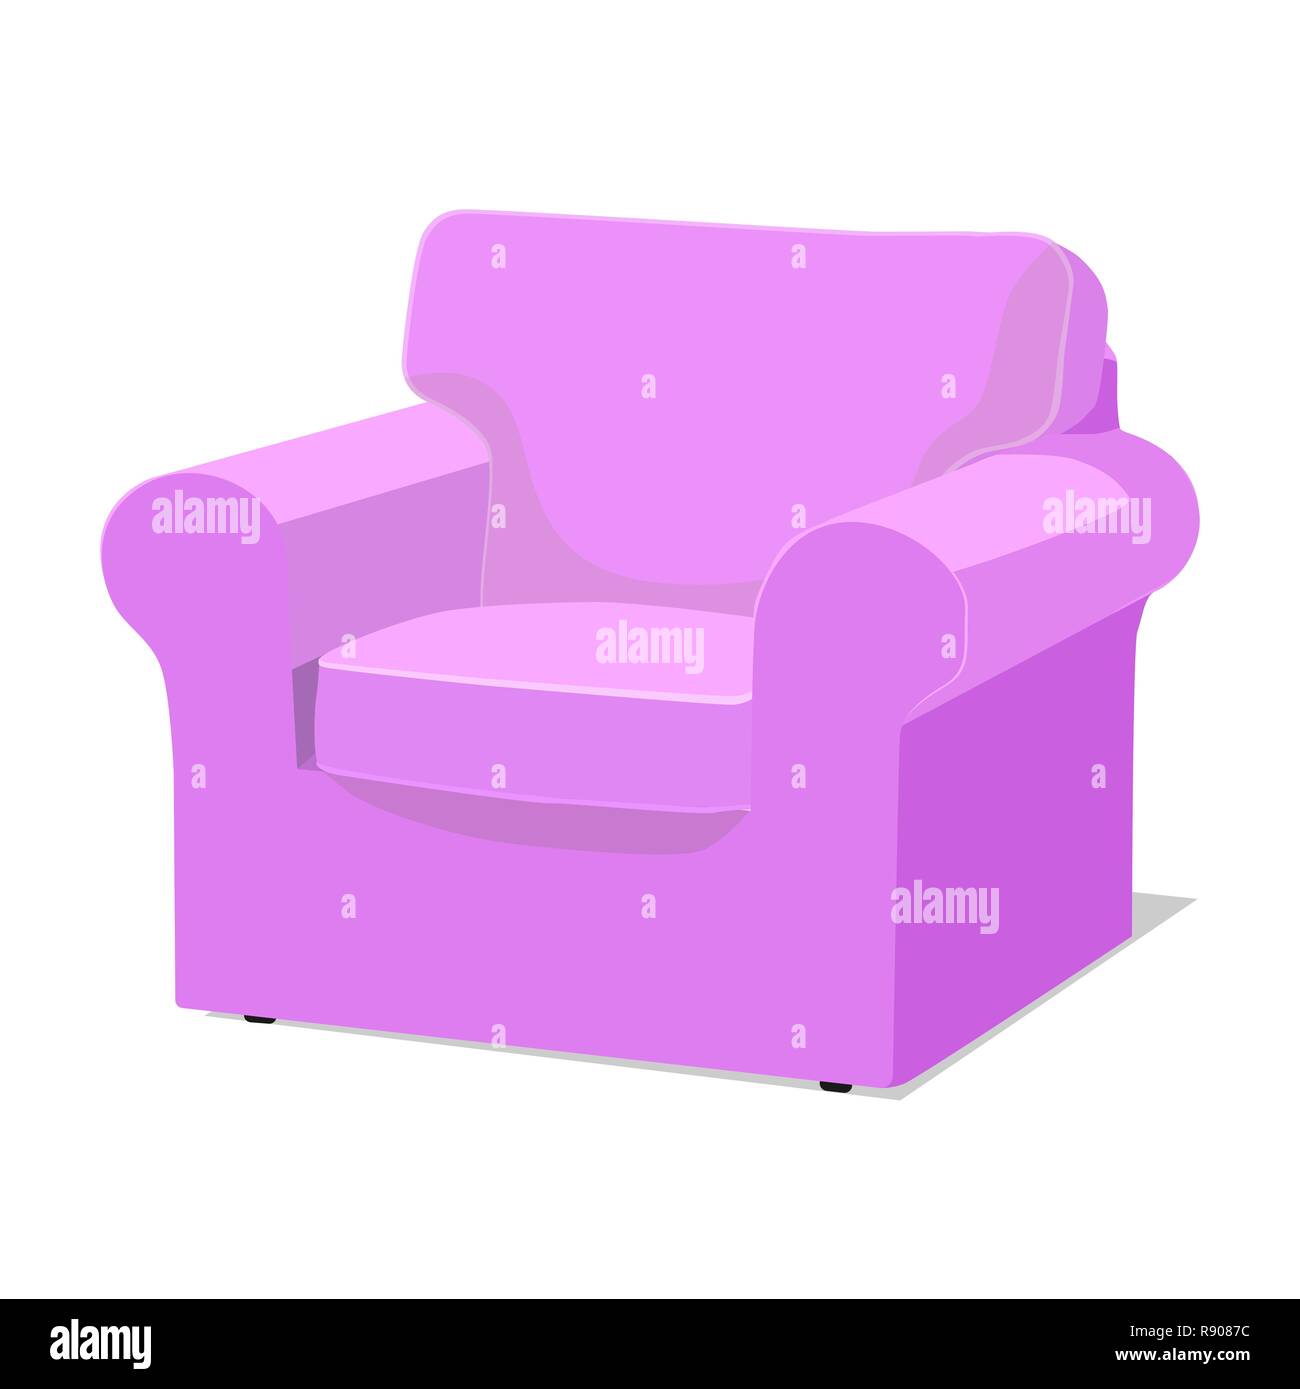 Moderno sillón con tapizado suave púrpura - elemento de diseño interior aislado sobre fondo blanco. Ilustración del Vector